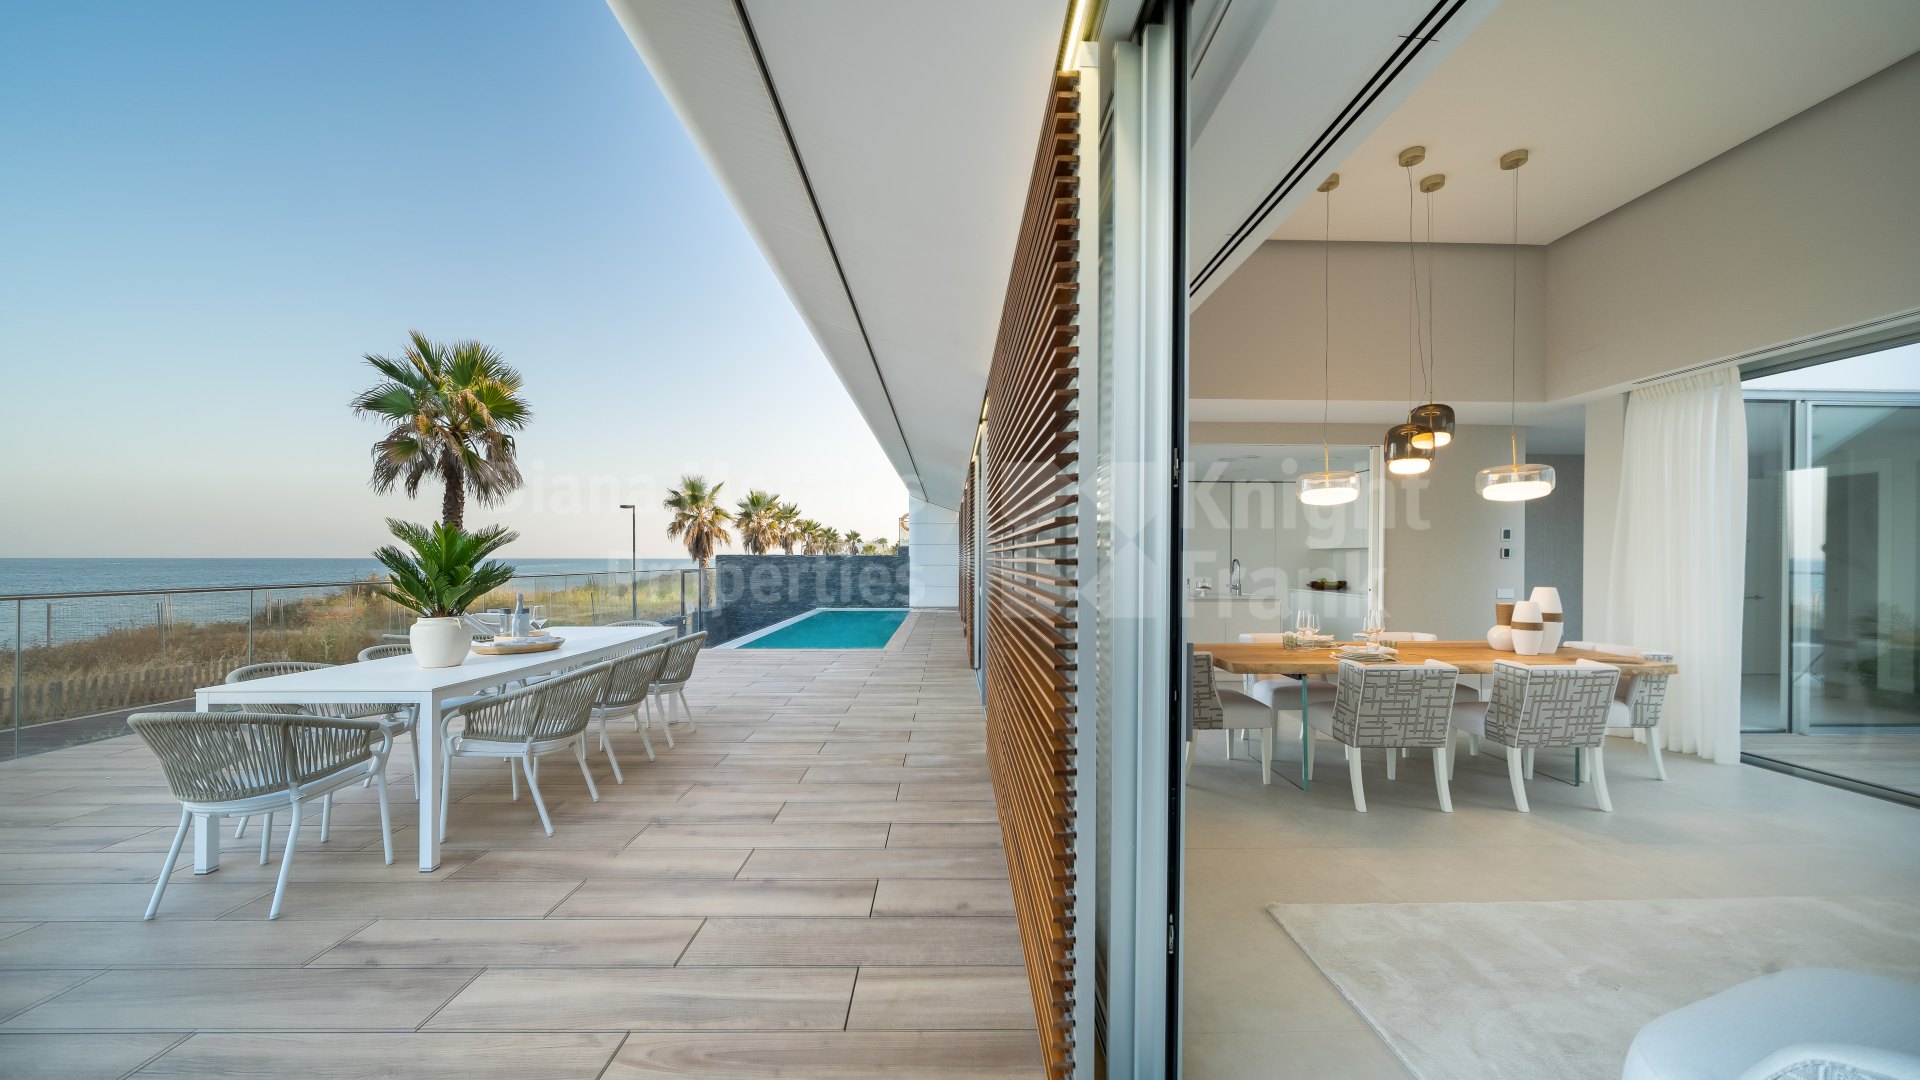 Estepona Playa, Wunderschöne Villa in bewachter Anlage direkt am Meer